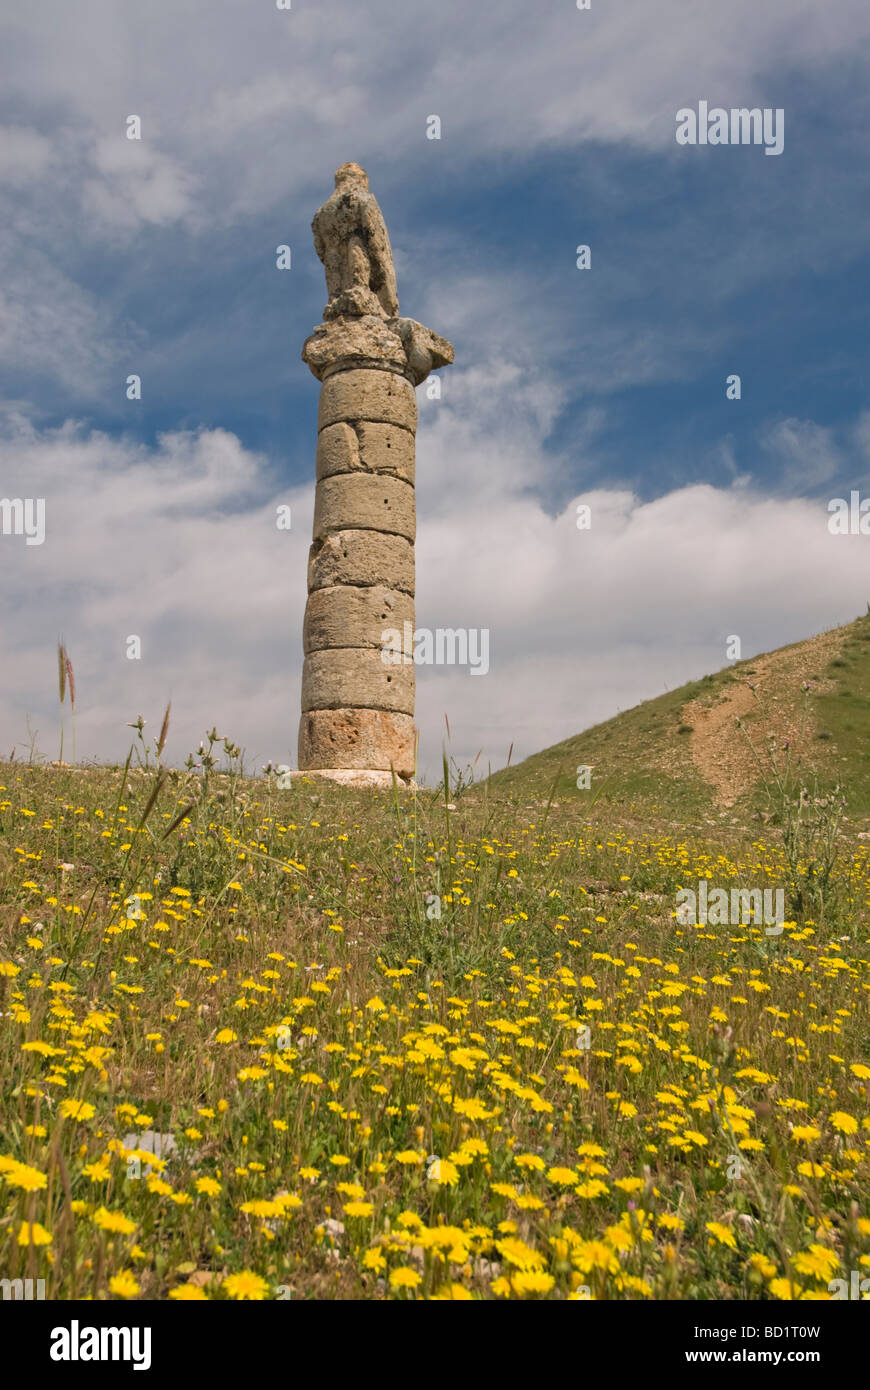 Eagle statue in Mound Nemrut Turkey Stock Photo